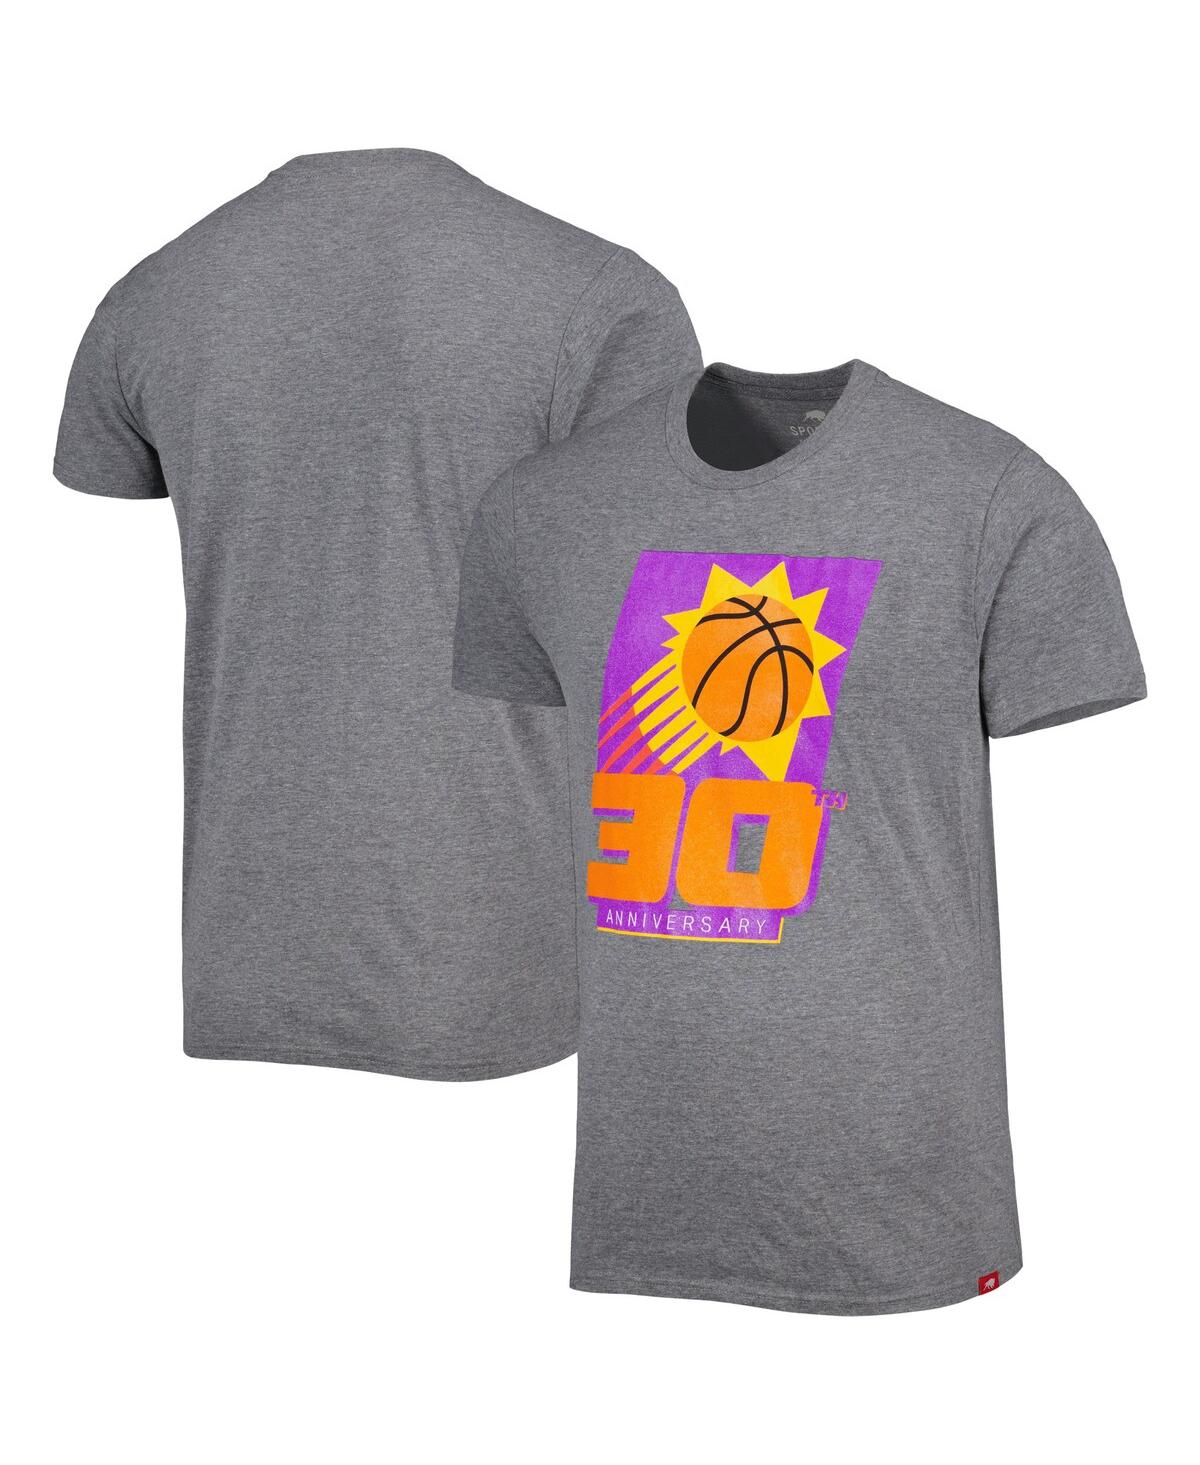 Shop Sportiqe Men's And Women's  Heather Gray Phoenix Suns 30th Anniversary Celebration Comfy Tri-blend T-